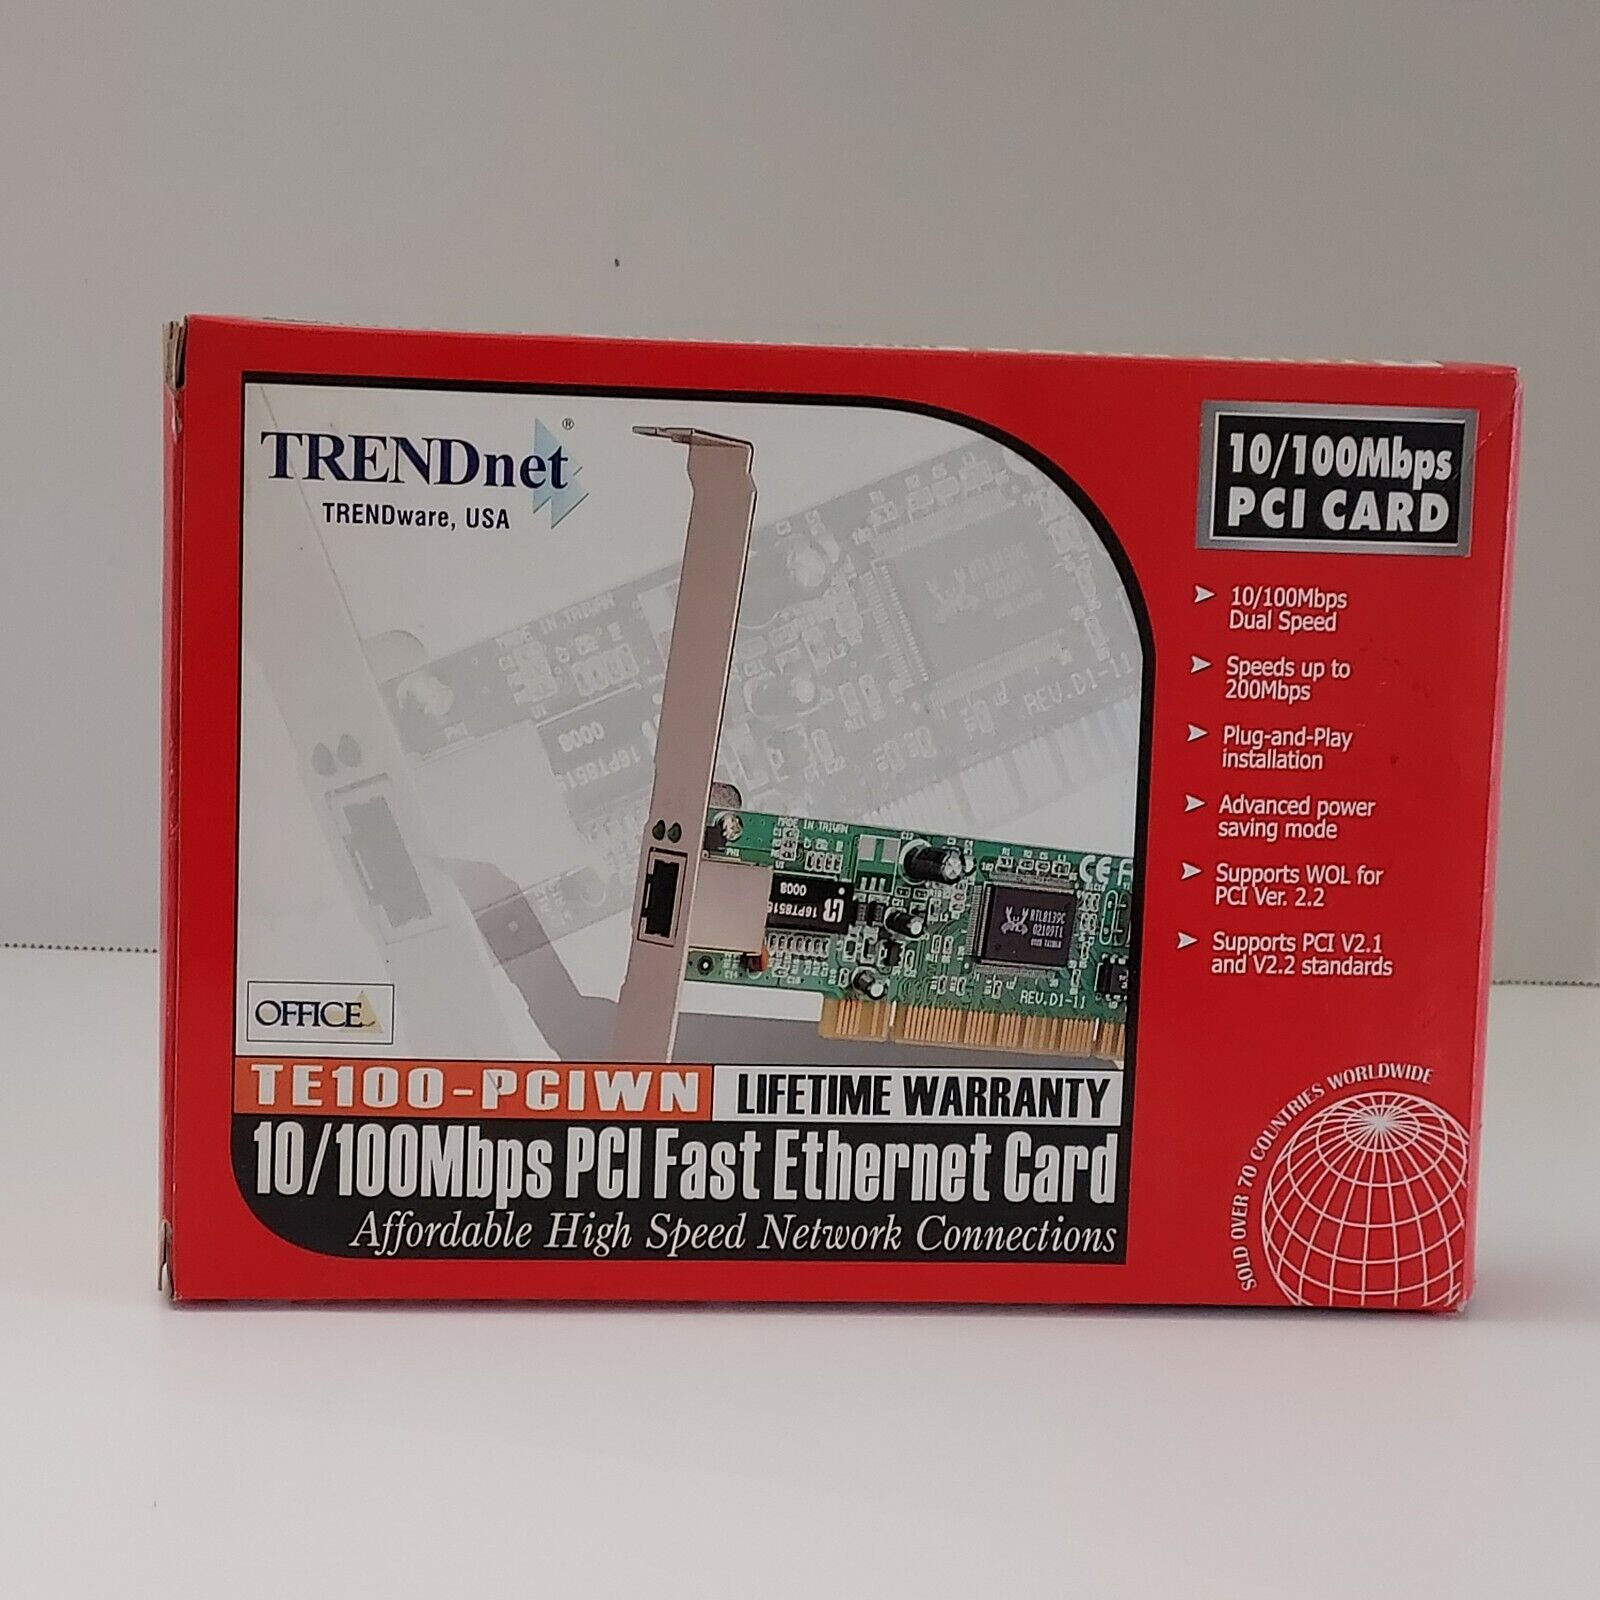 TRENDnet TE100-PCIWA 10/100Mbps PCI Fast Ethernet Card Wake-on-LAN